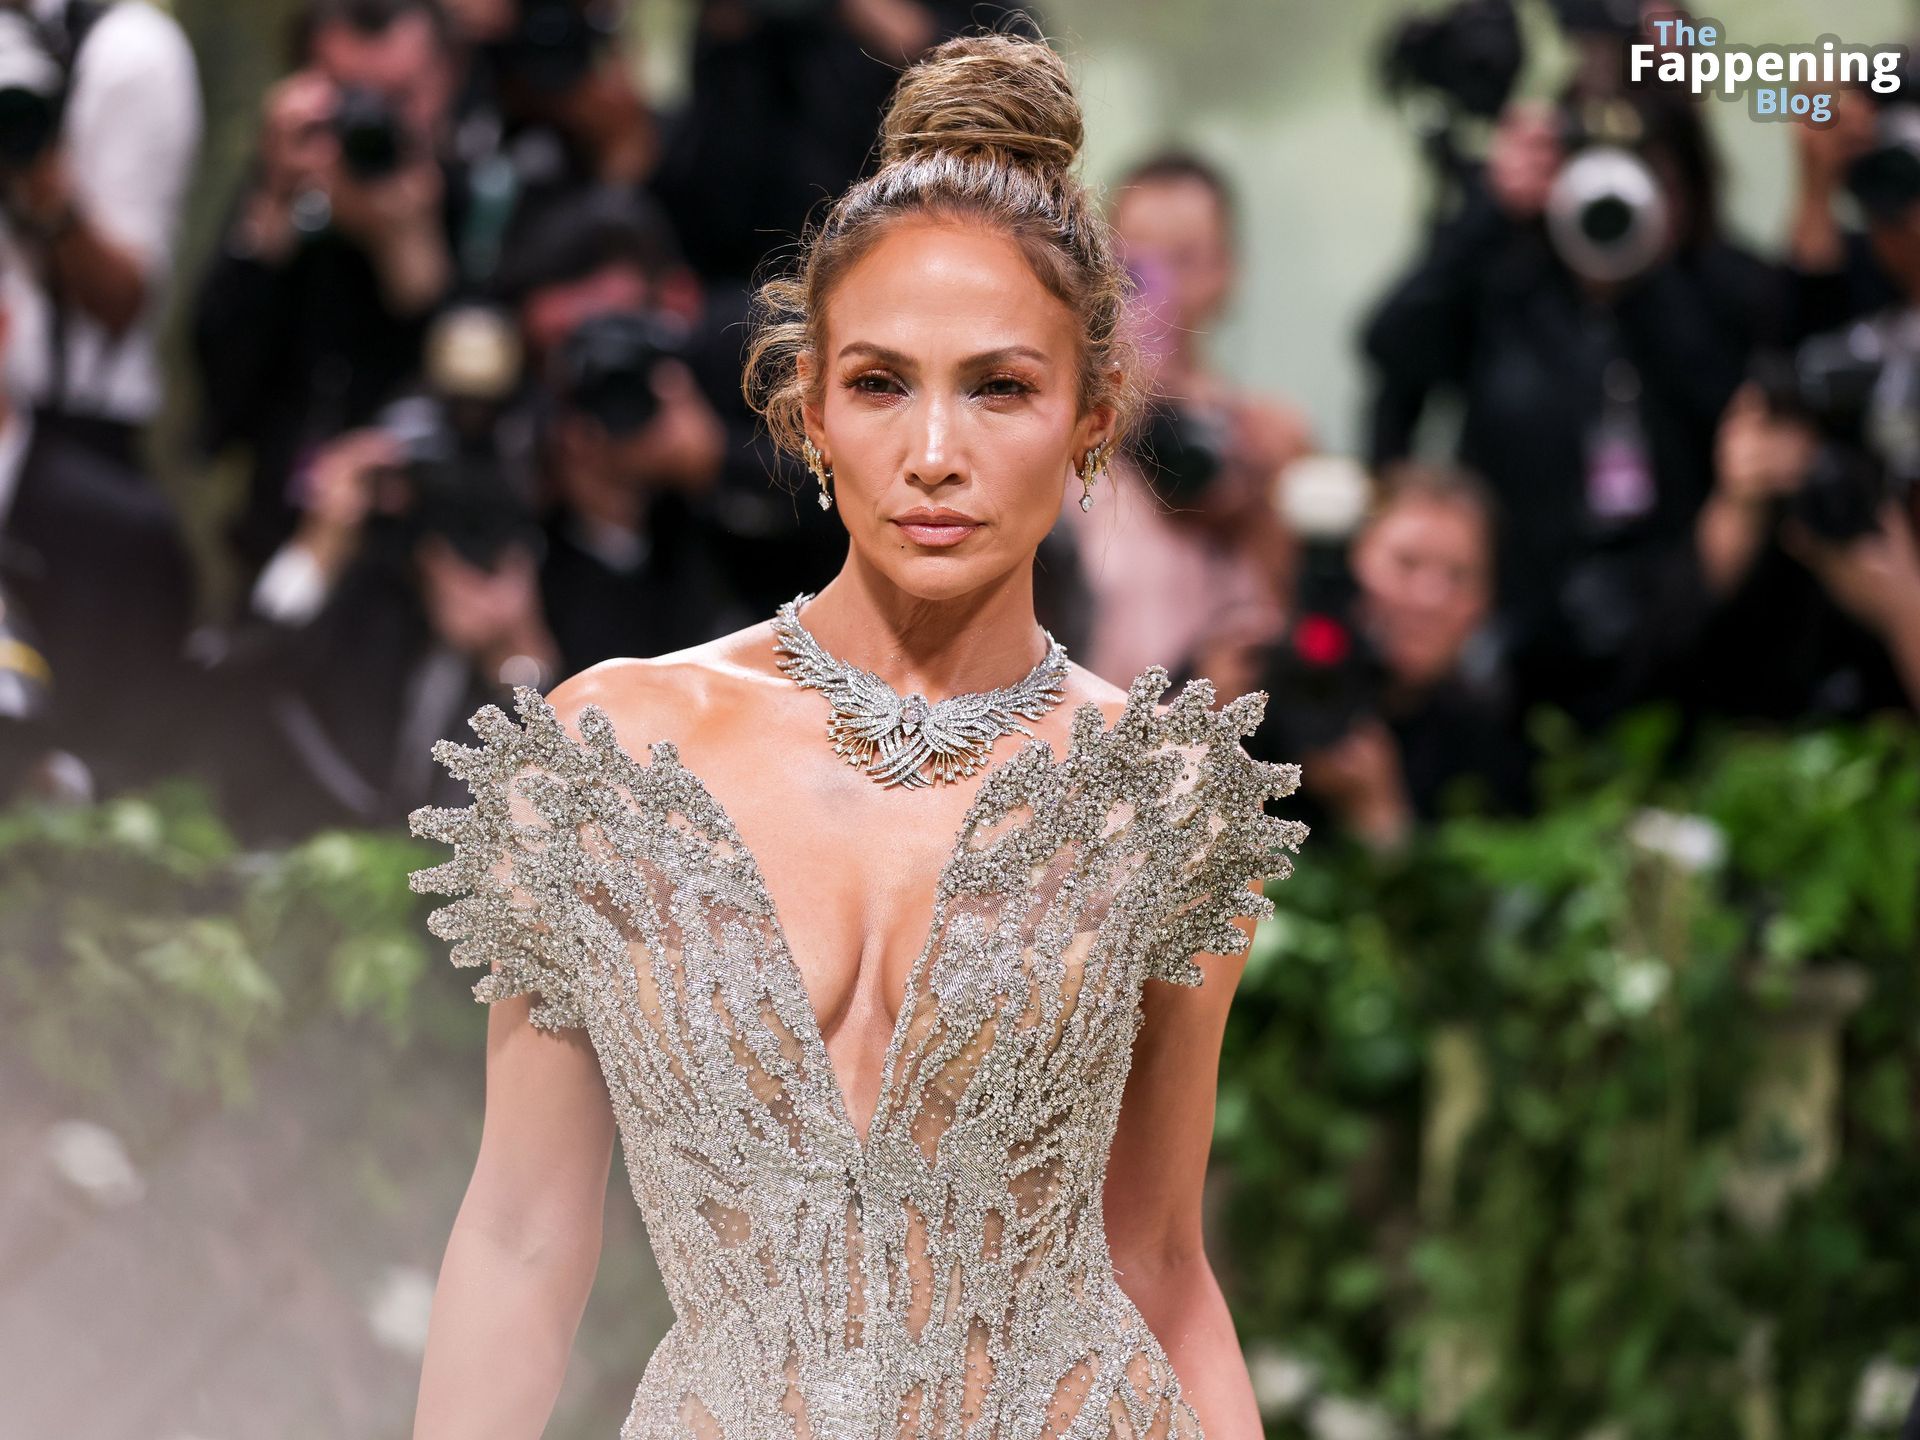 Jennifer-Lopez-Hot-107-The-Fappening-Blog.jpg